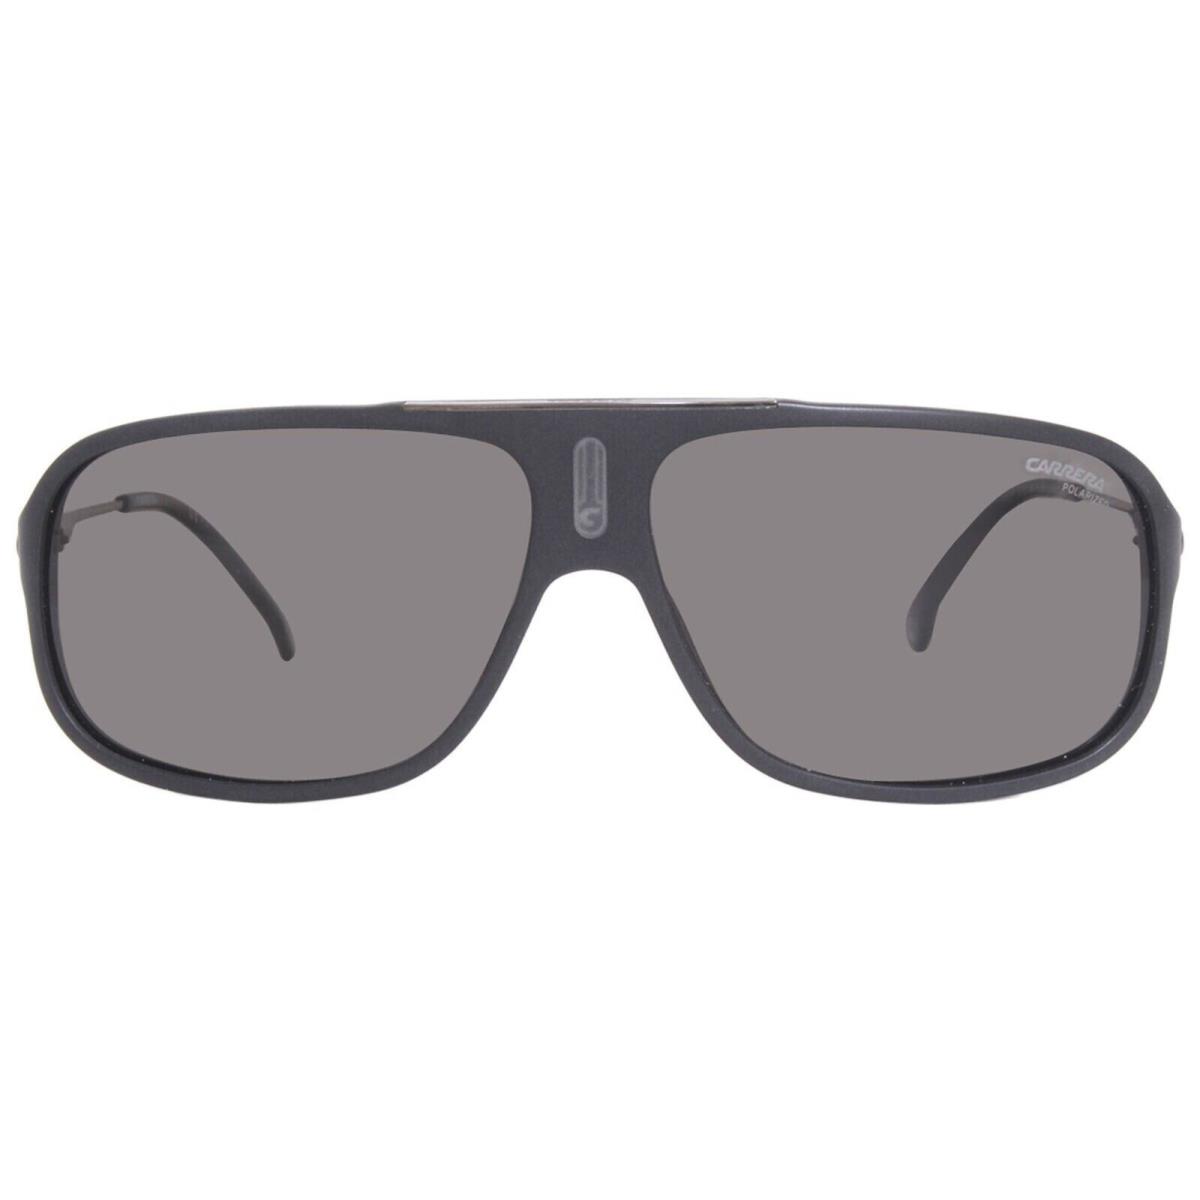 Carrera Cool65 003M9 Special Edition Sunglasses Men`s Matte Black/polarized 64mm - Frame: Black, Lens: Gray